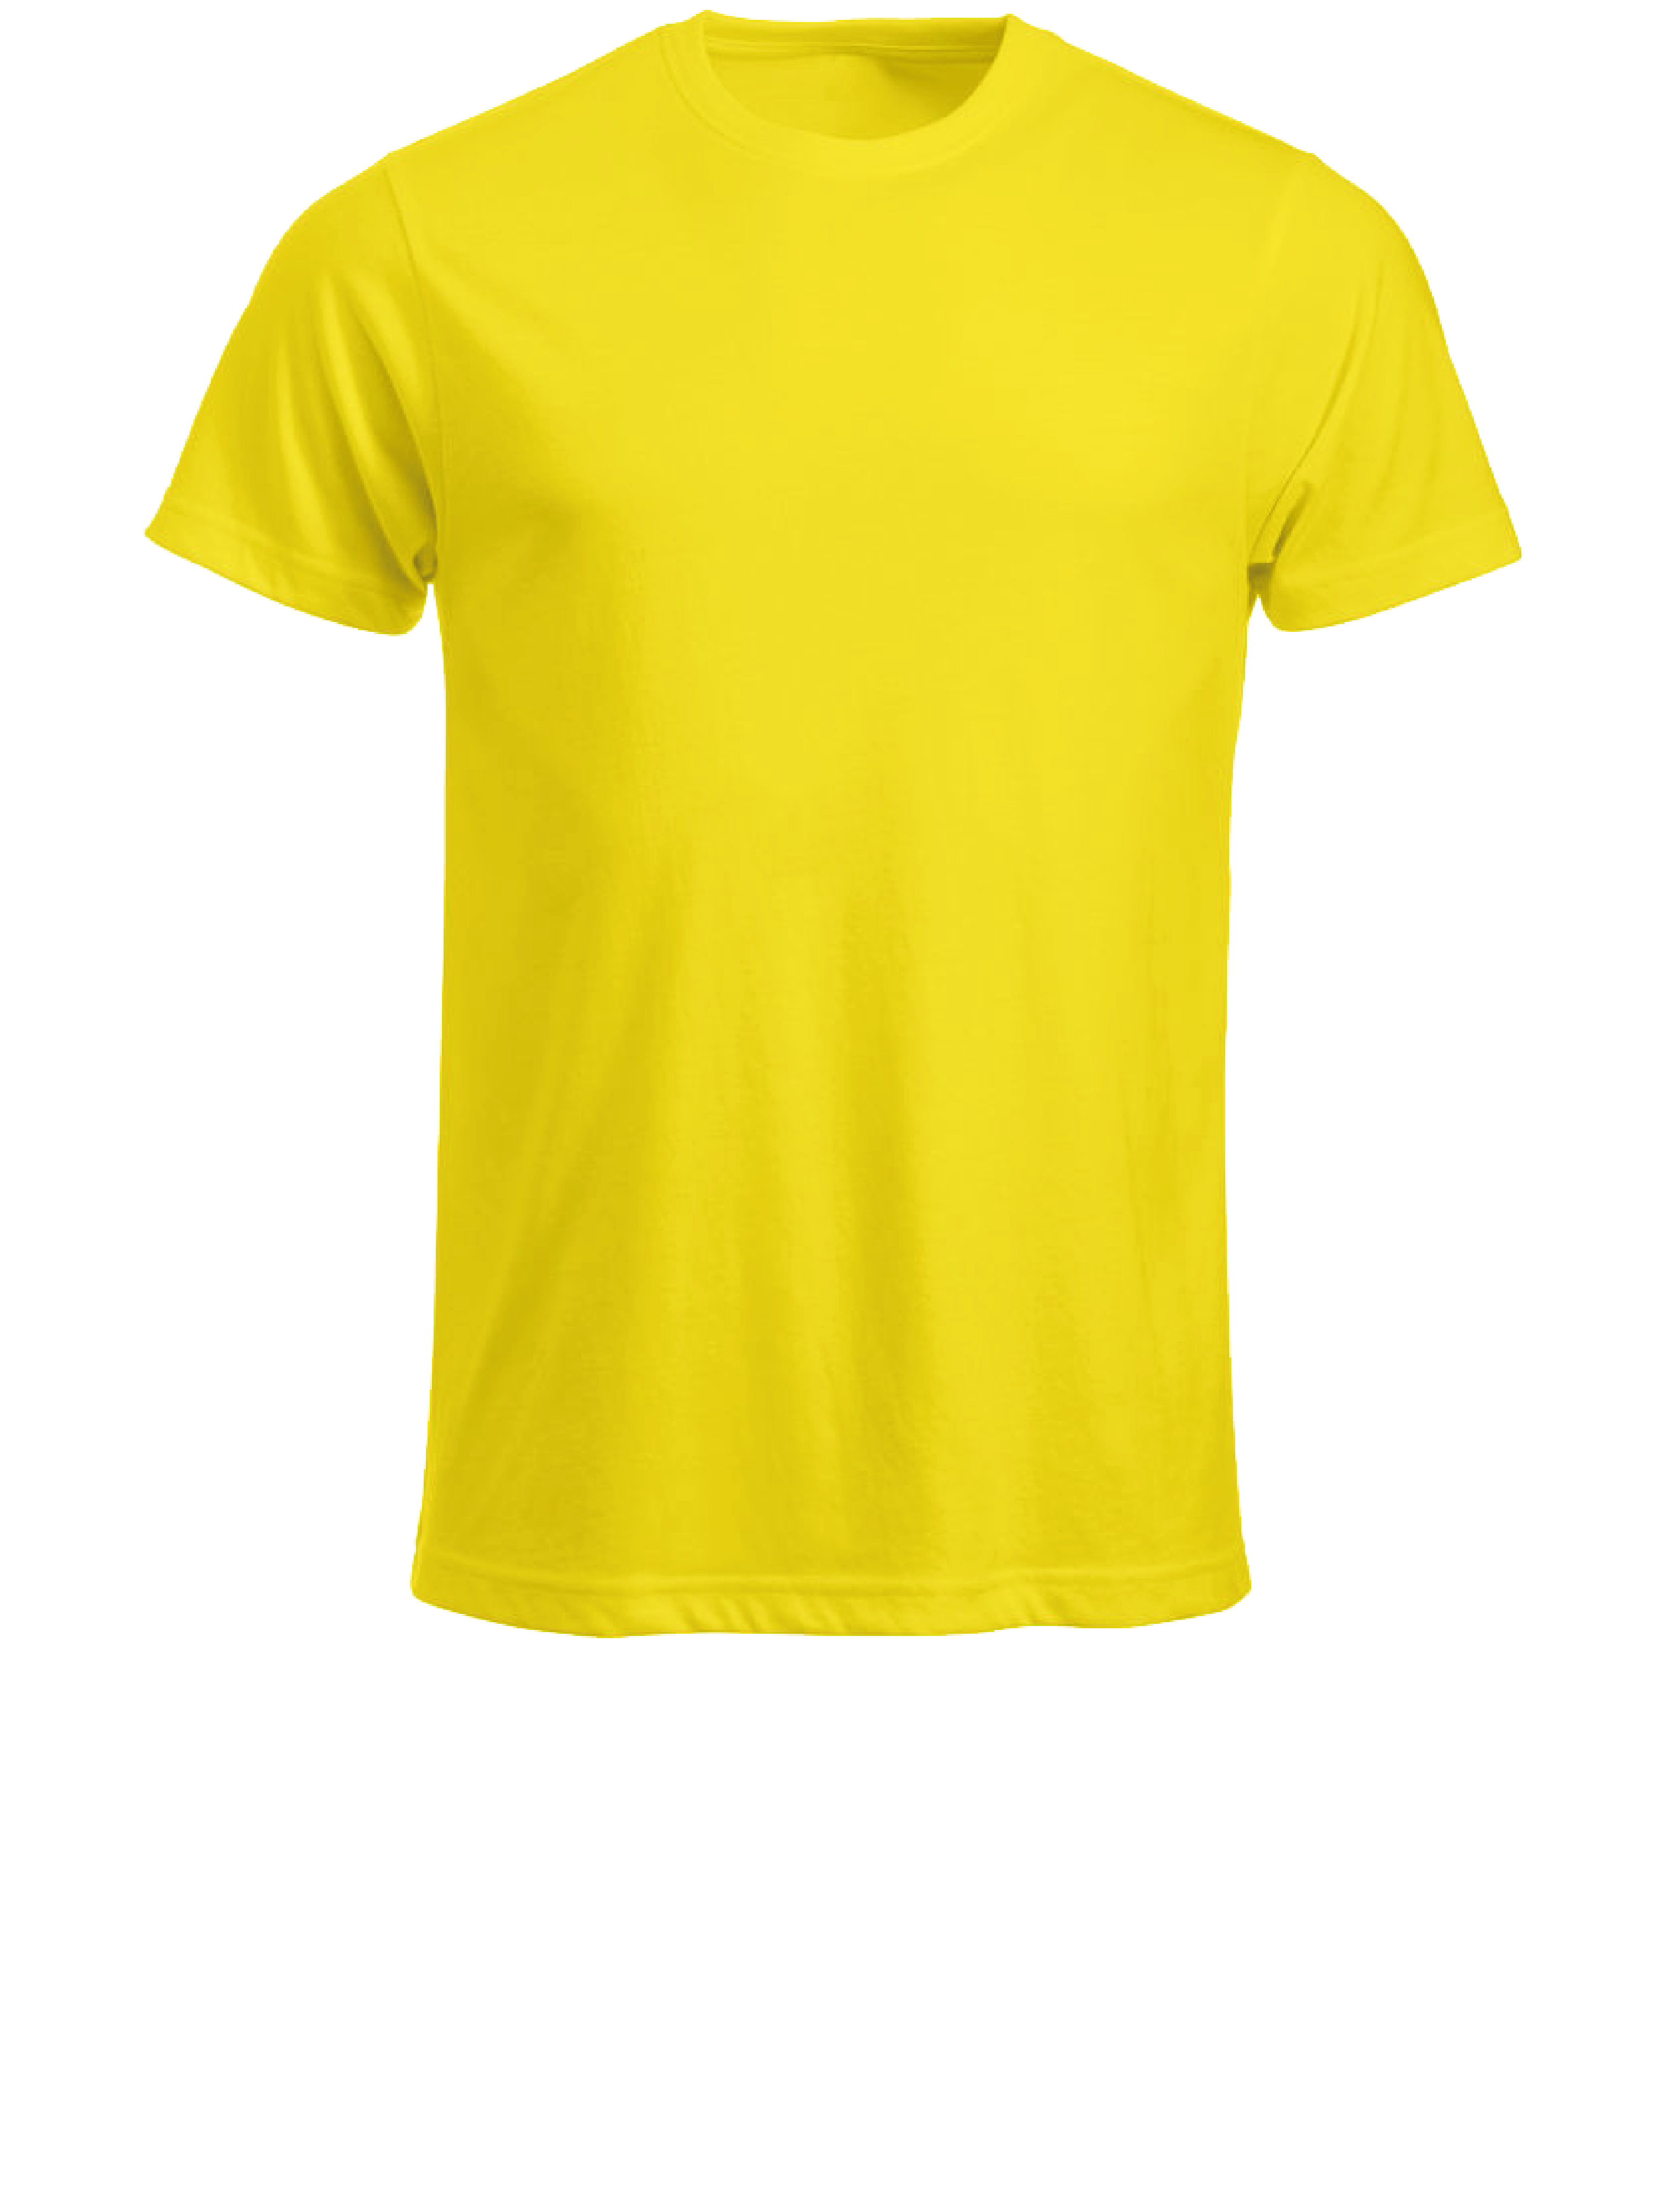 shirt gelb-01.png